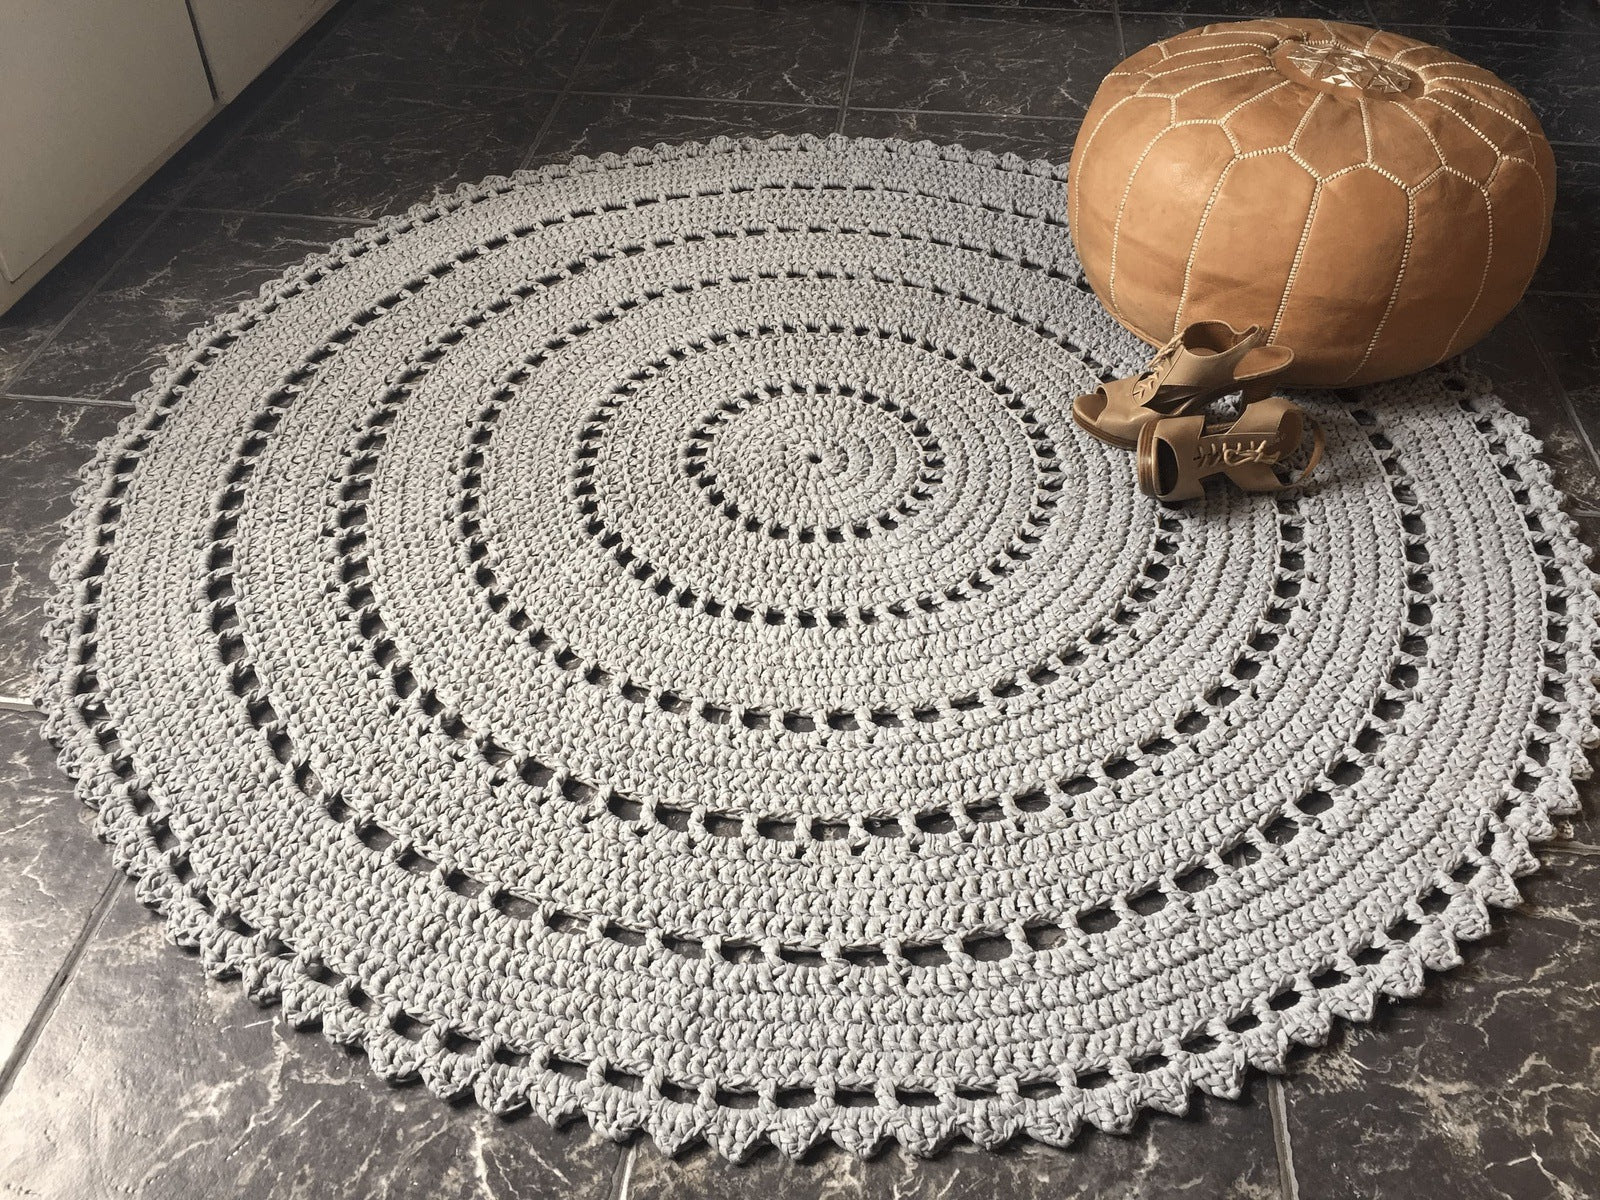 Handmade Cotton Chunky Crochet Doily Round Gray Yellow Rug/nursery